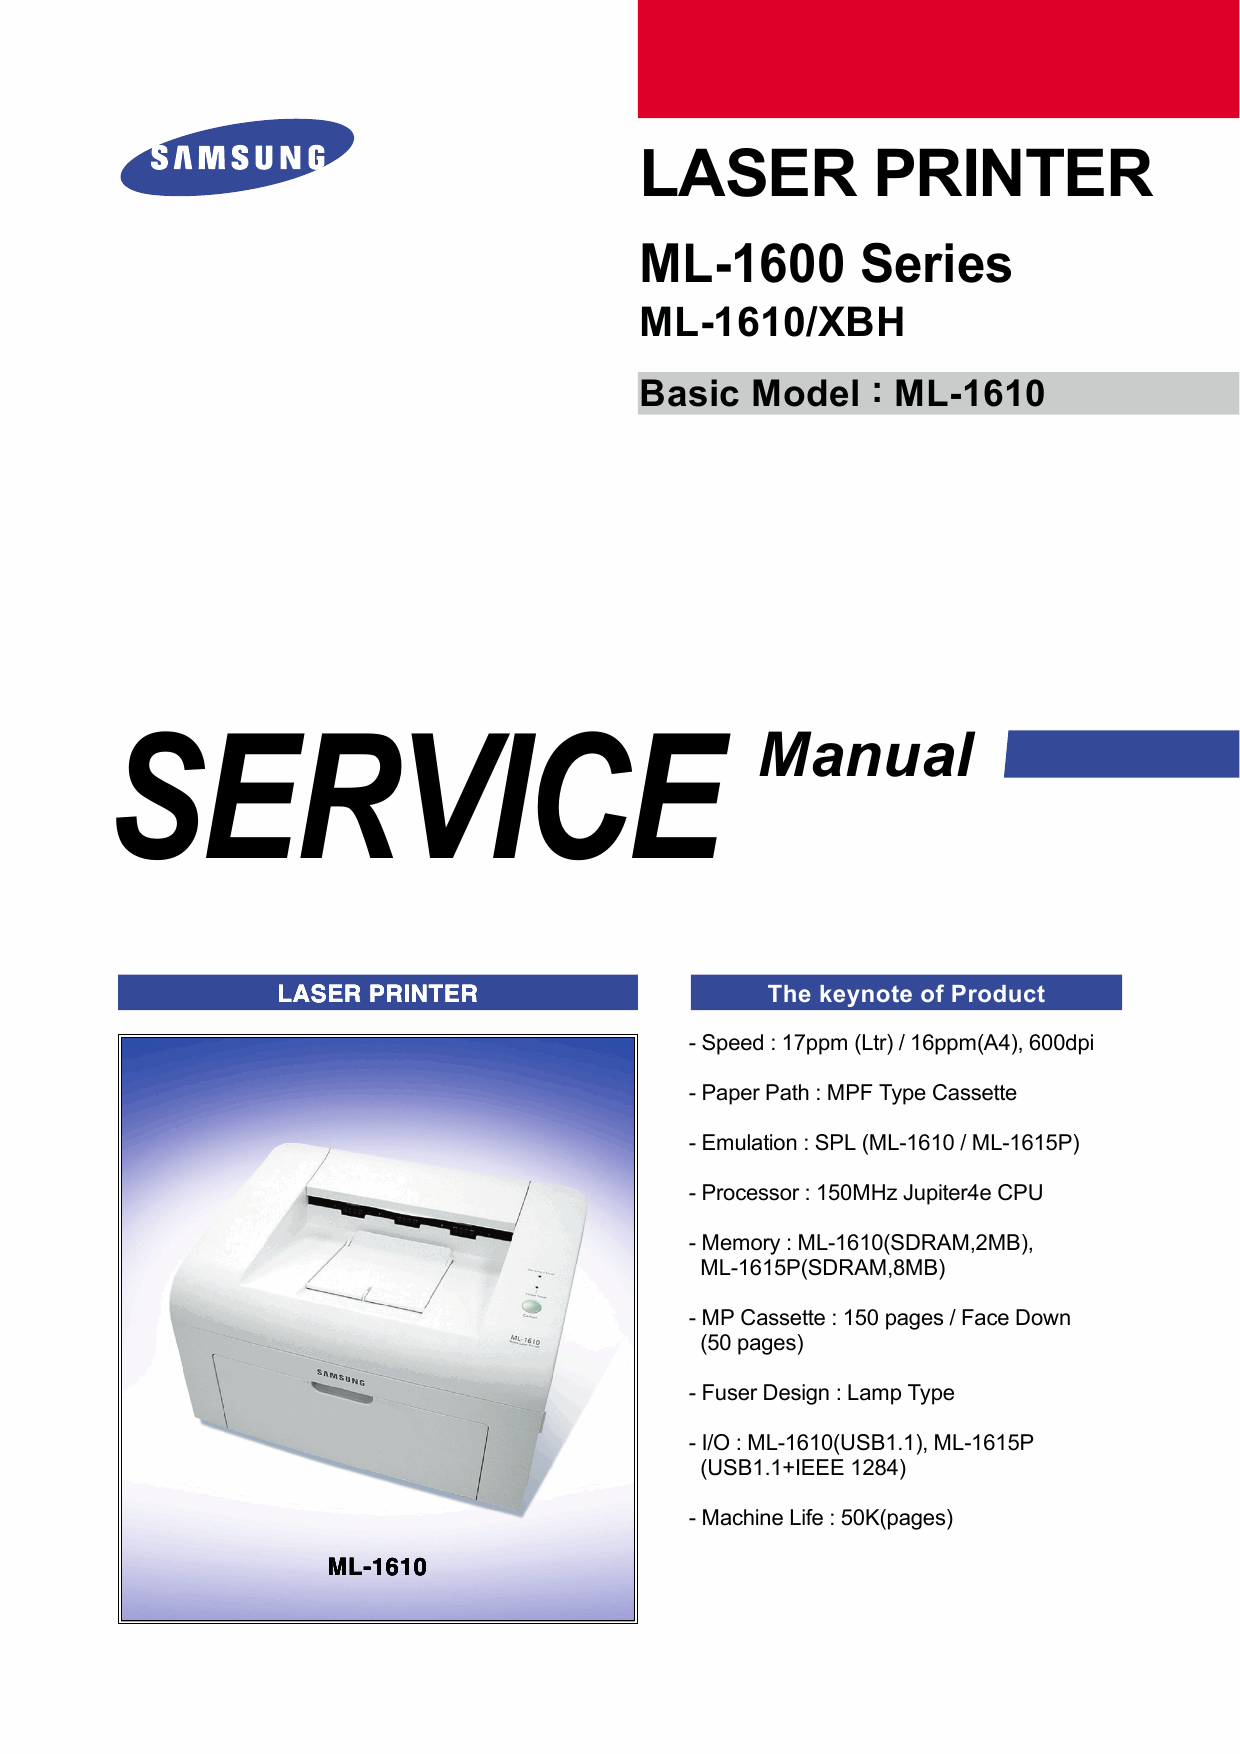 Samsung Laser-Printer ML-1600 1610 Parts and Service Manual-1